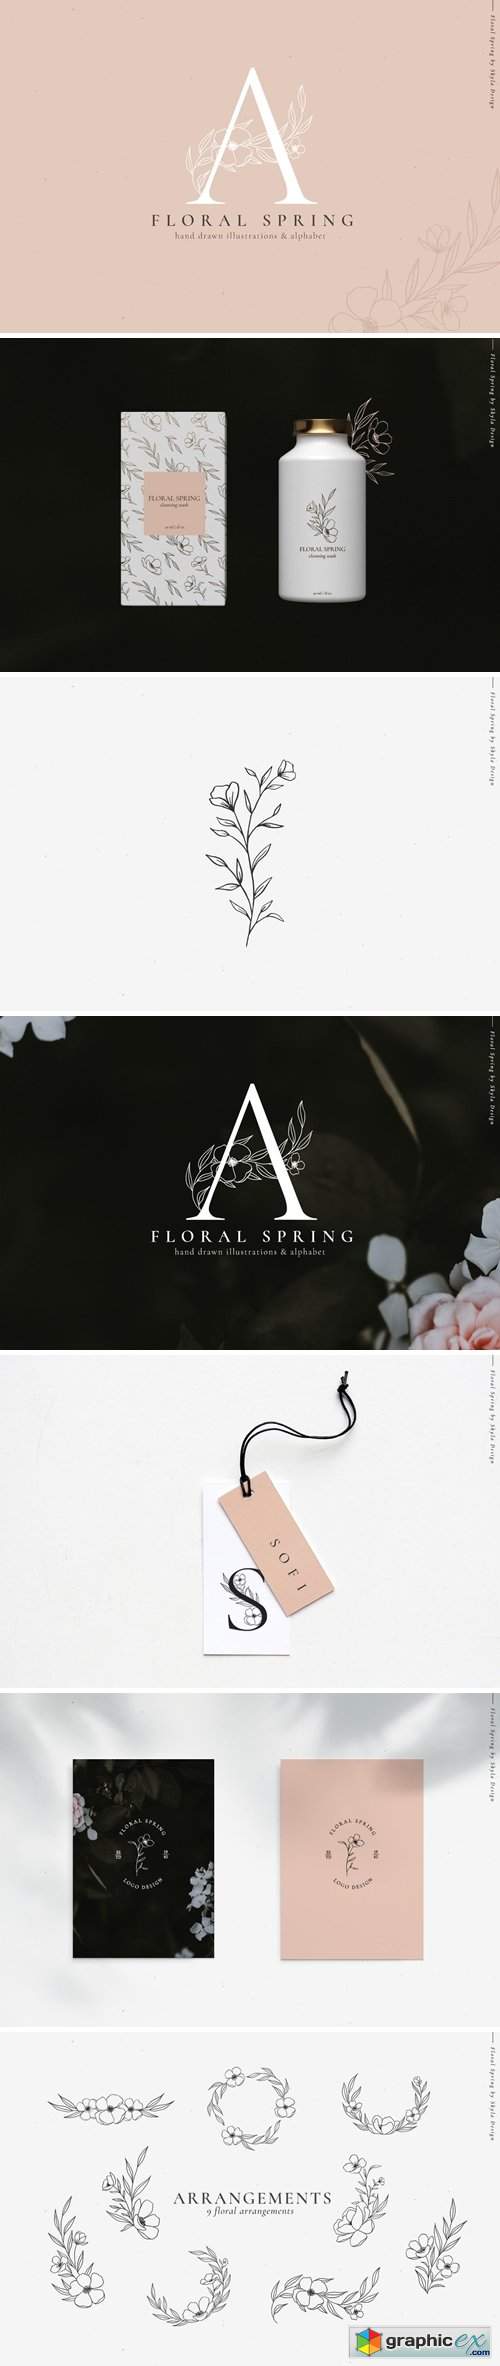 Floral Spring illustrations alphabet